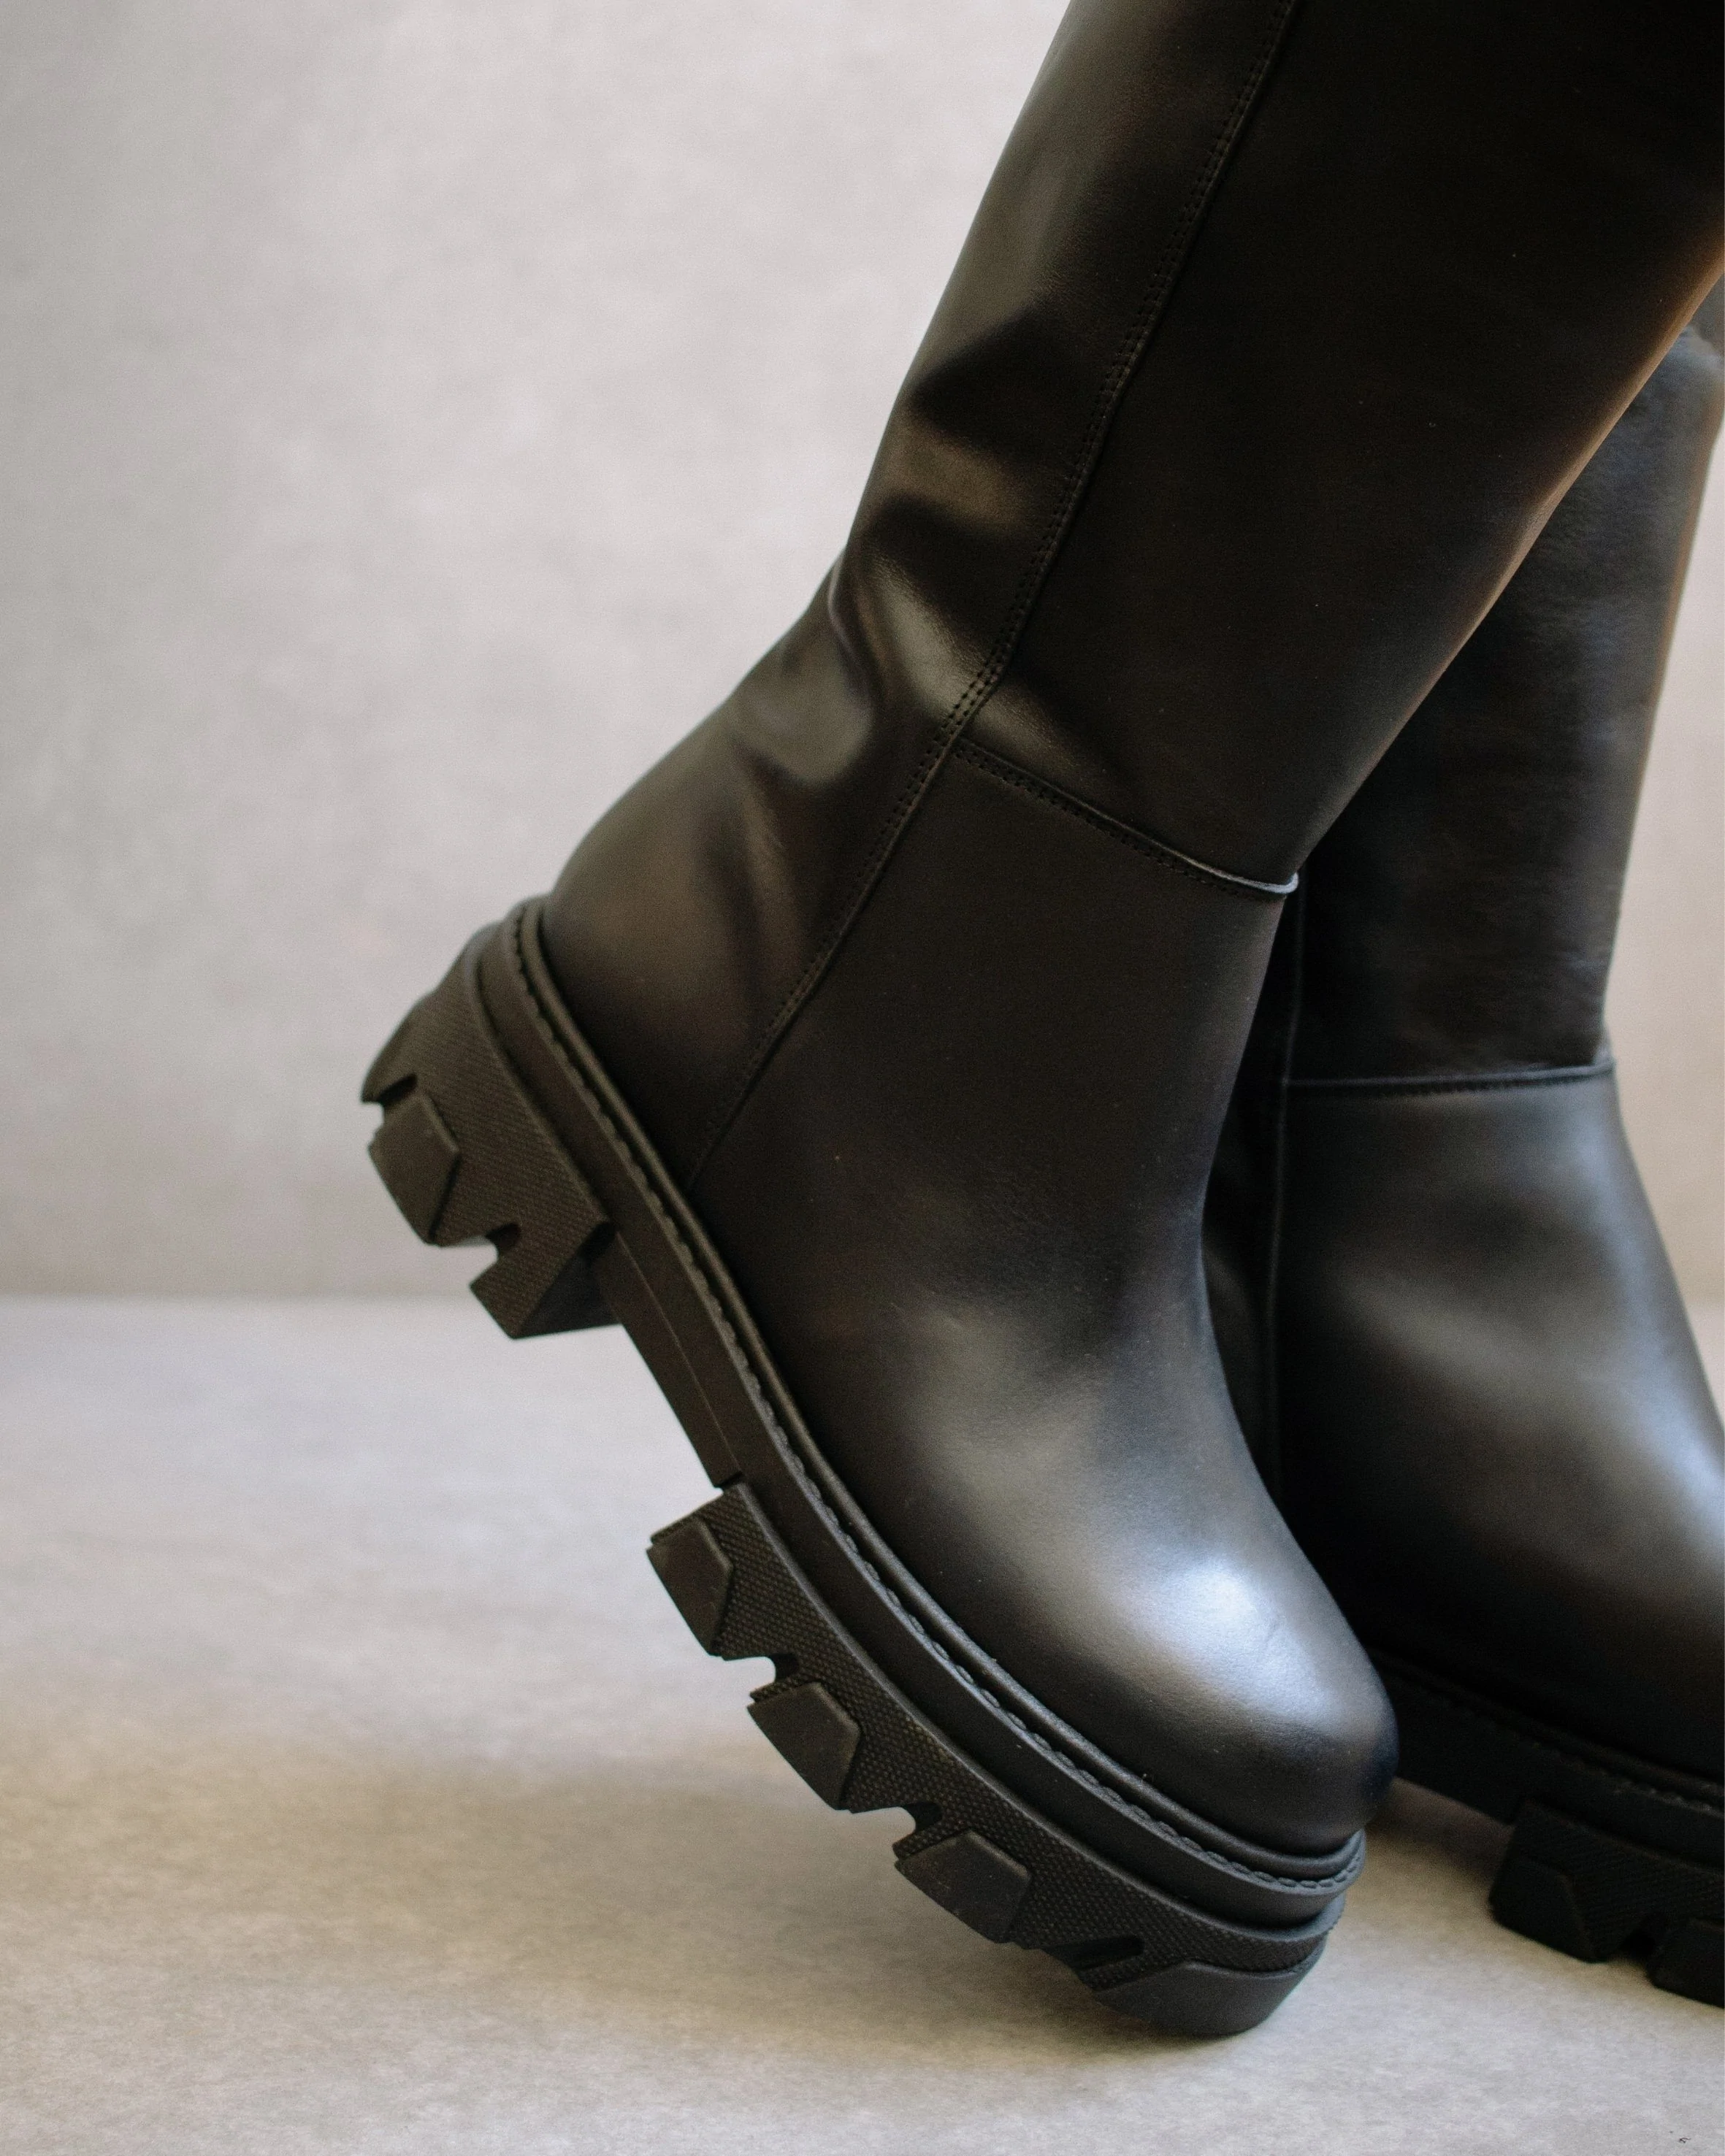 Product Image for Katiuska Leather High Boot, Black